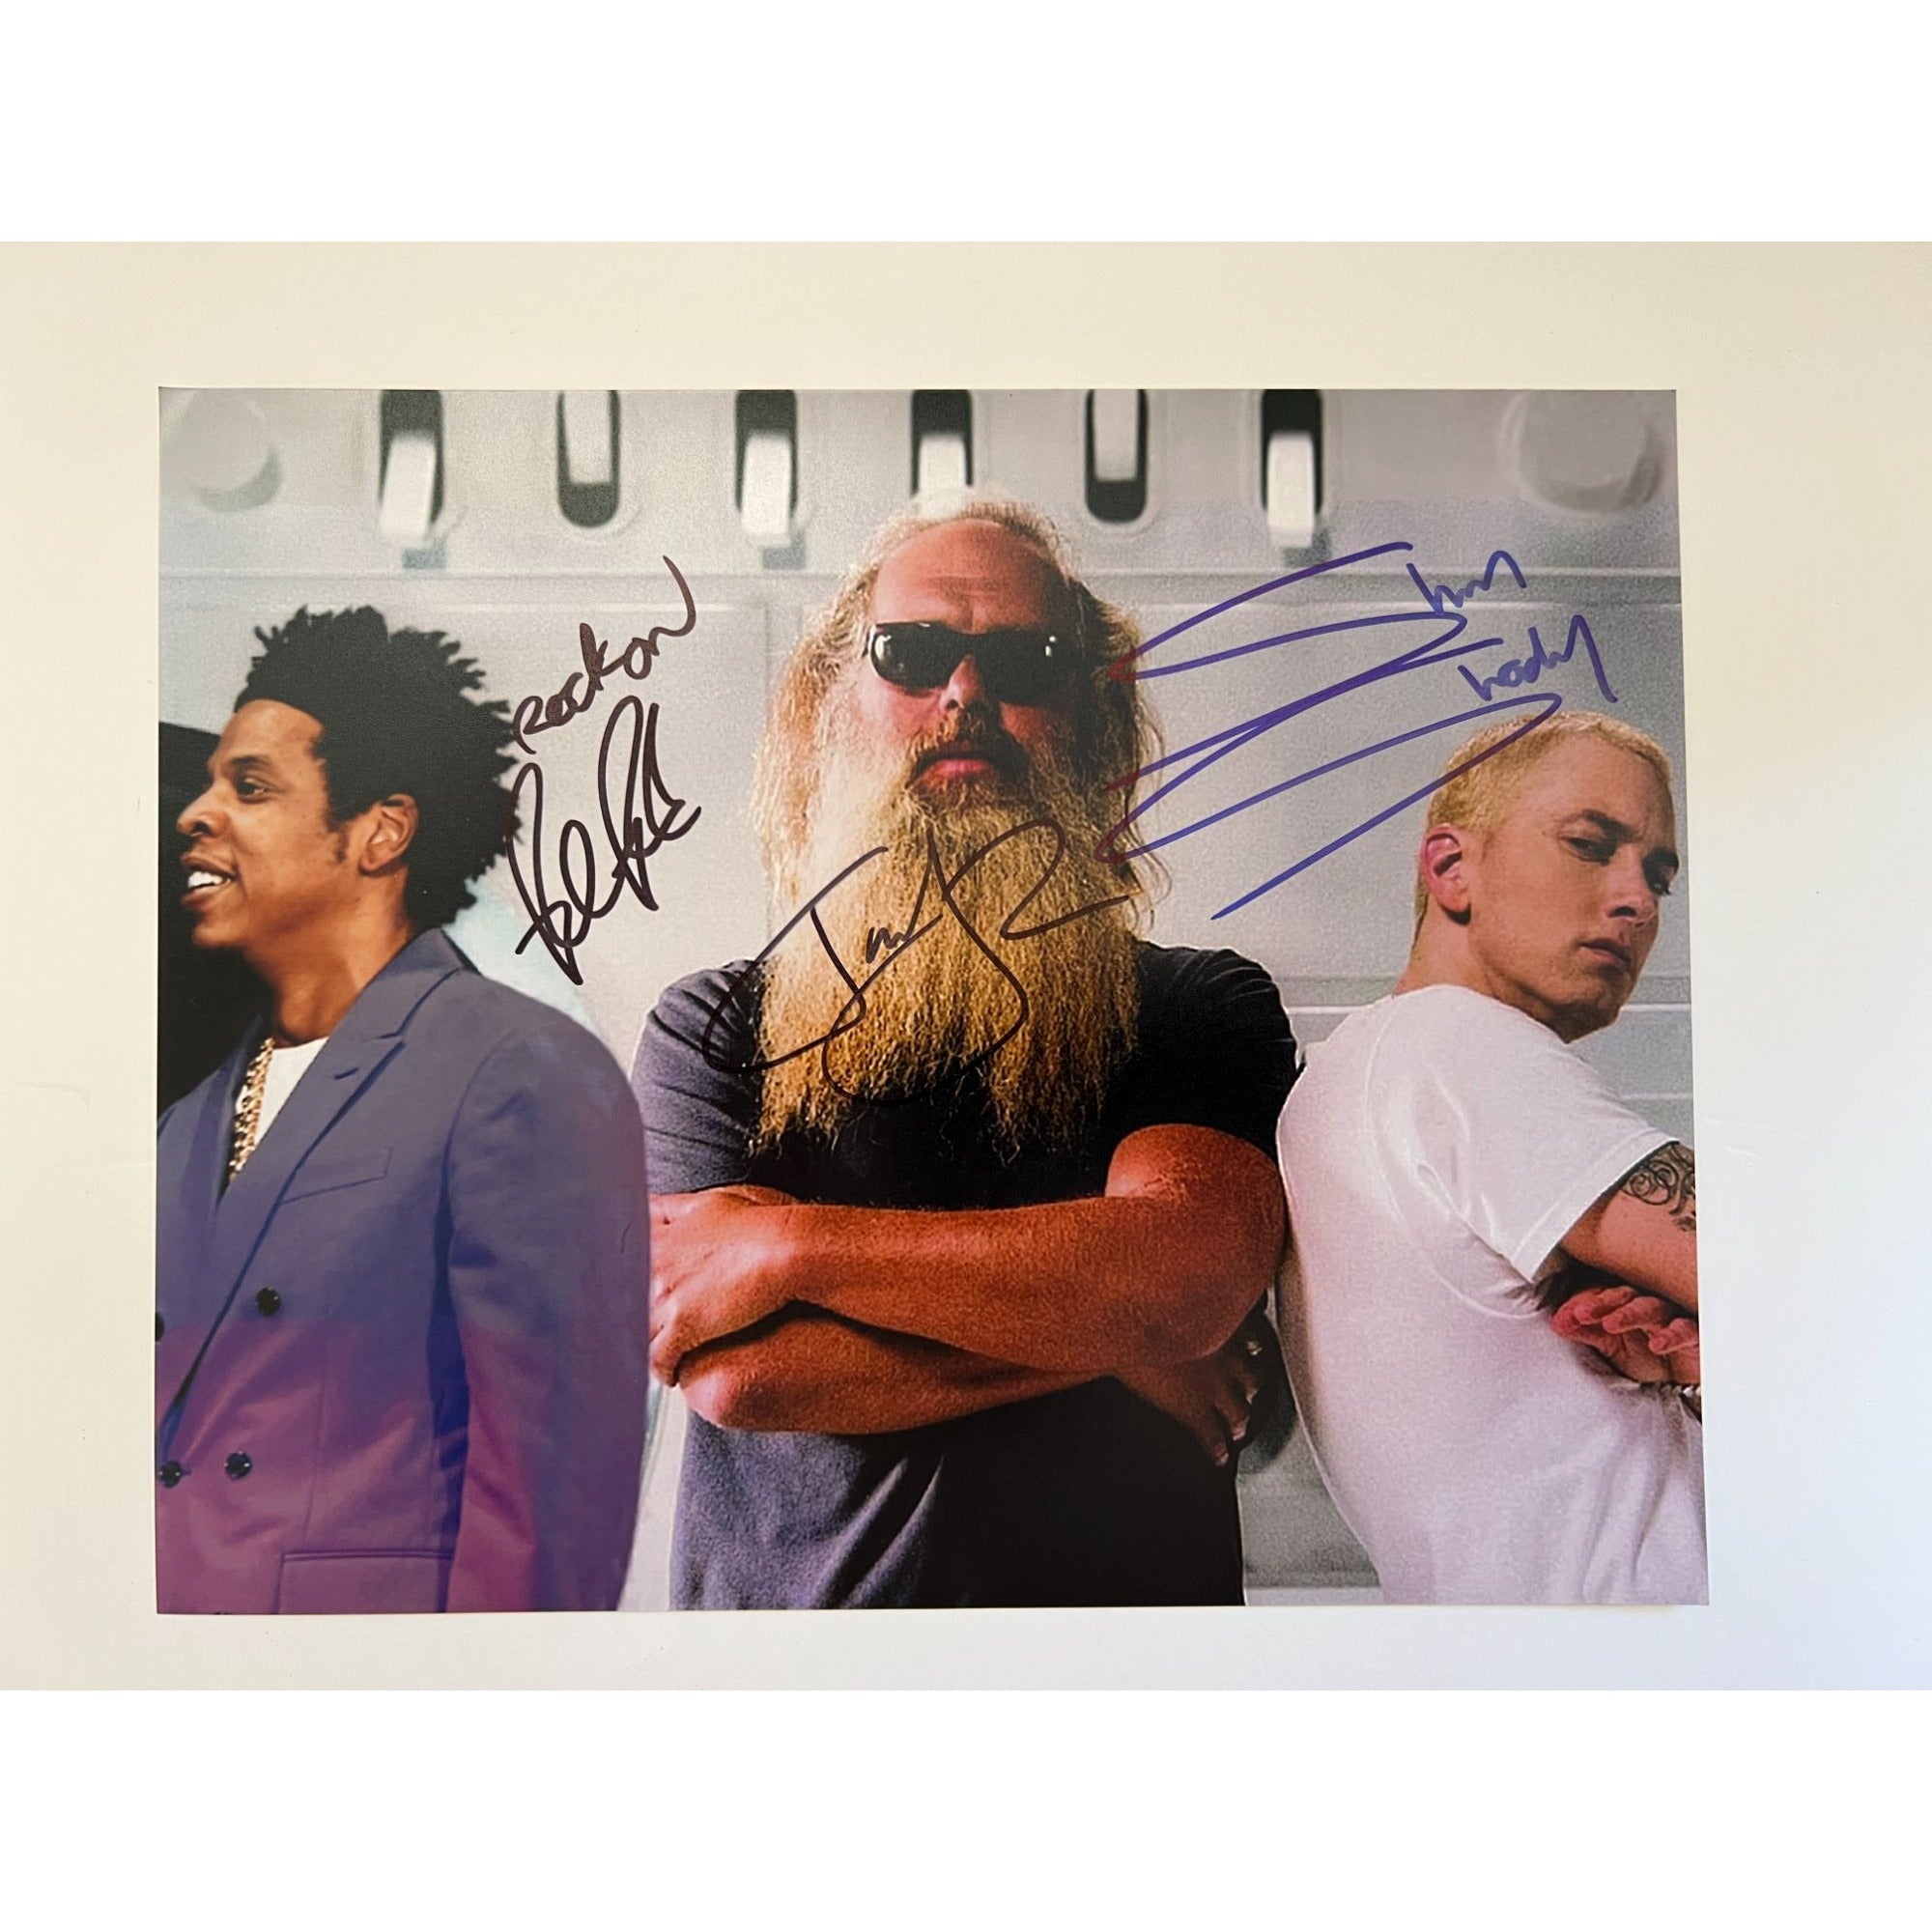 Eminem Slim Shady Marshall Mathers Rick Rubin and Jay Z 8x10 photo signed with proof